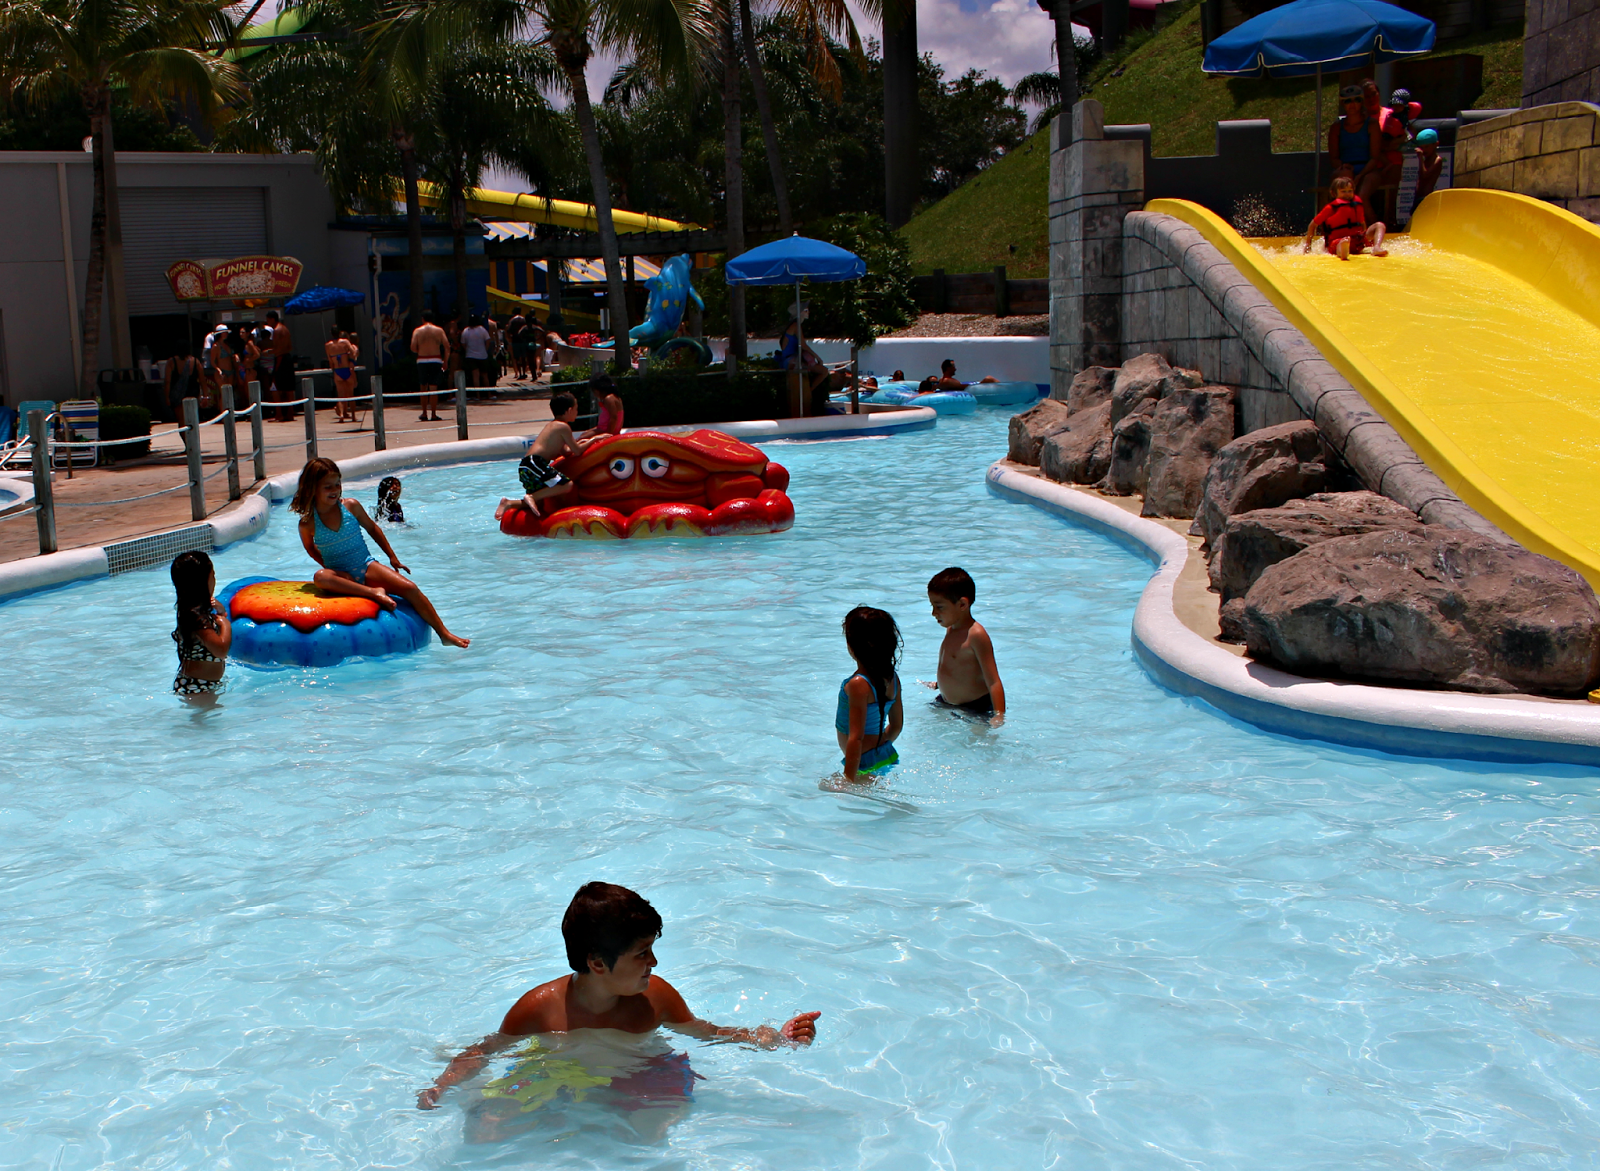 Rapid-water-park-swimming-family- fun-summer